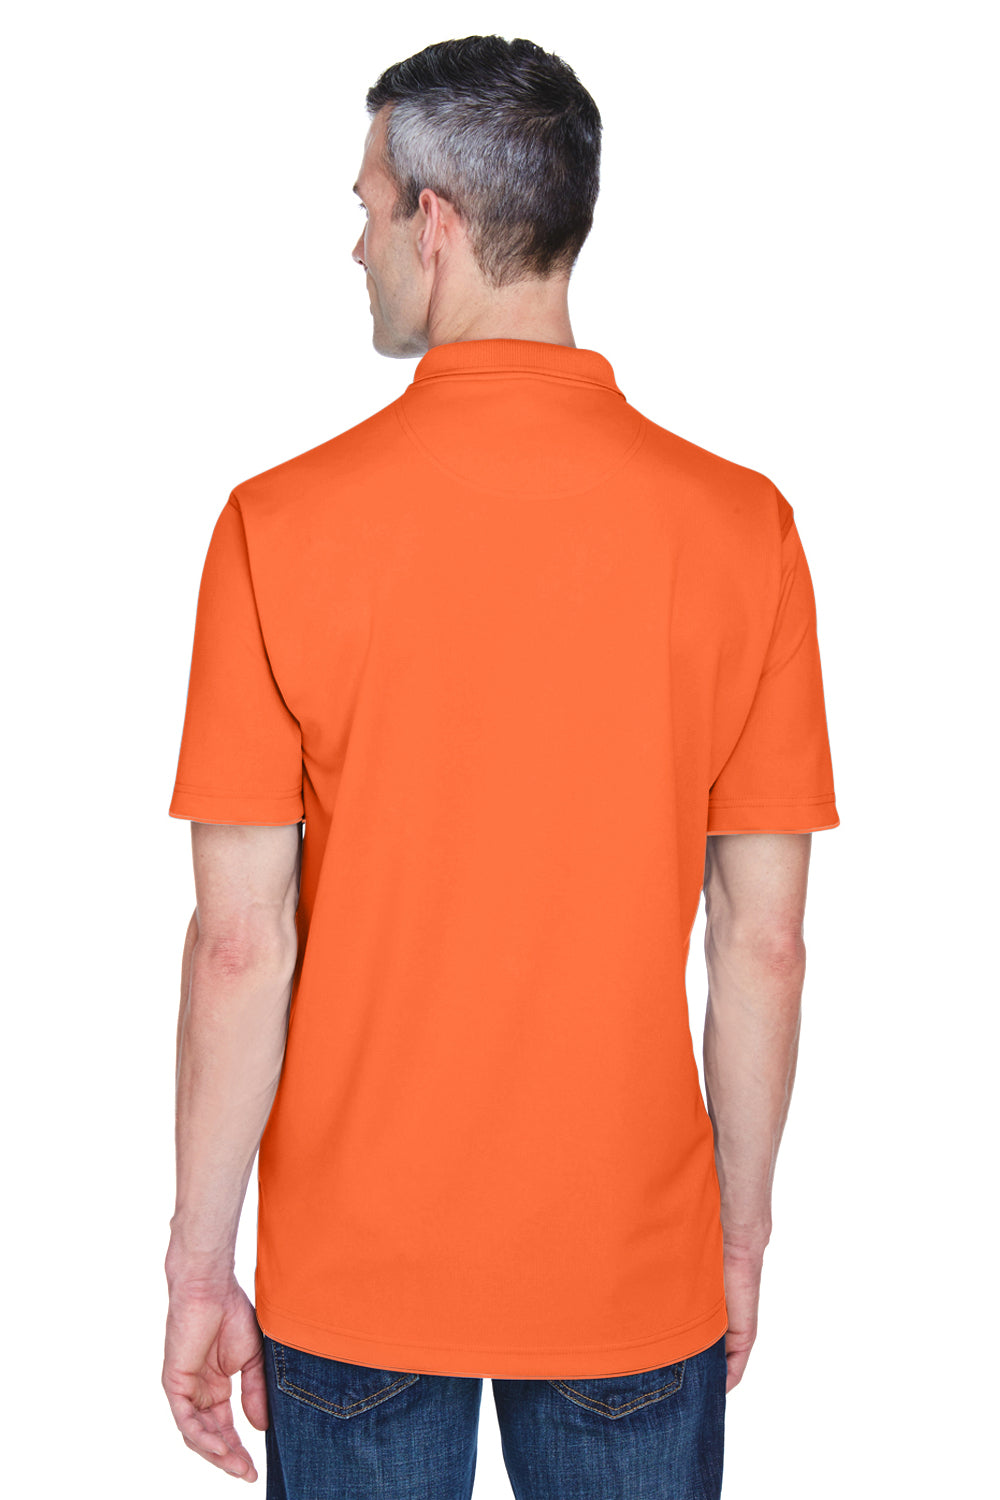 UltraClub 8445 Mens Cool & Dry Performance Moisture Wicking Short Sleeve Polo Shirt Orange Back